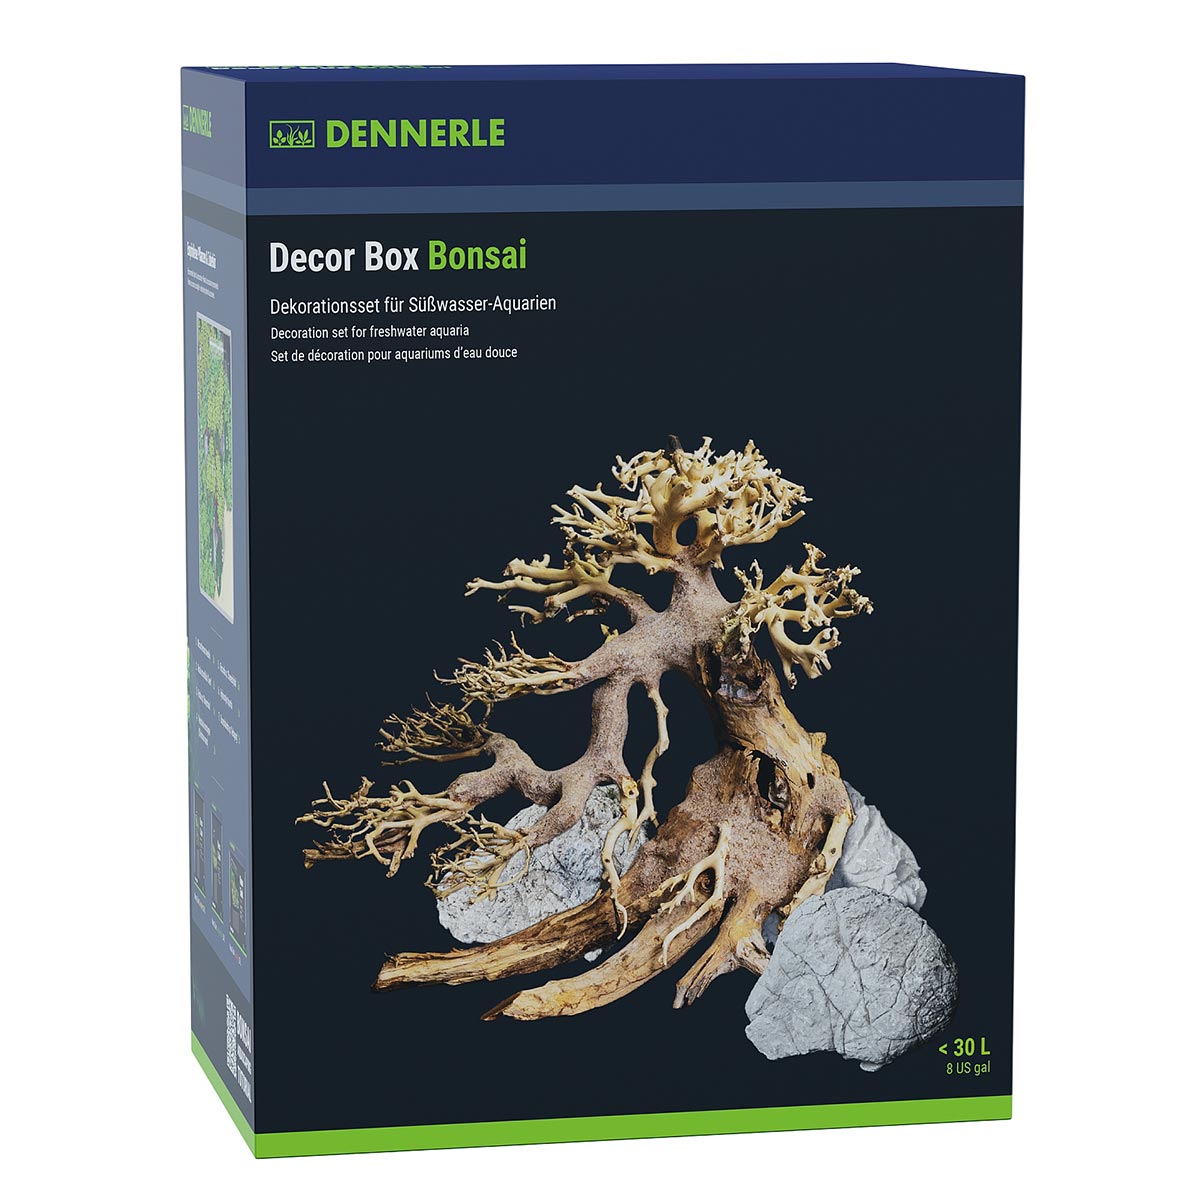 Dennerle Decor Box Bonsai von Dennerle